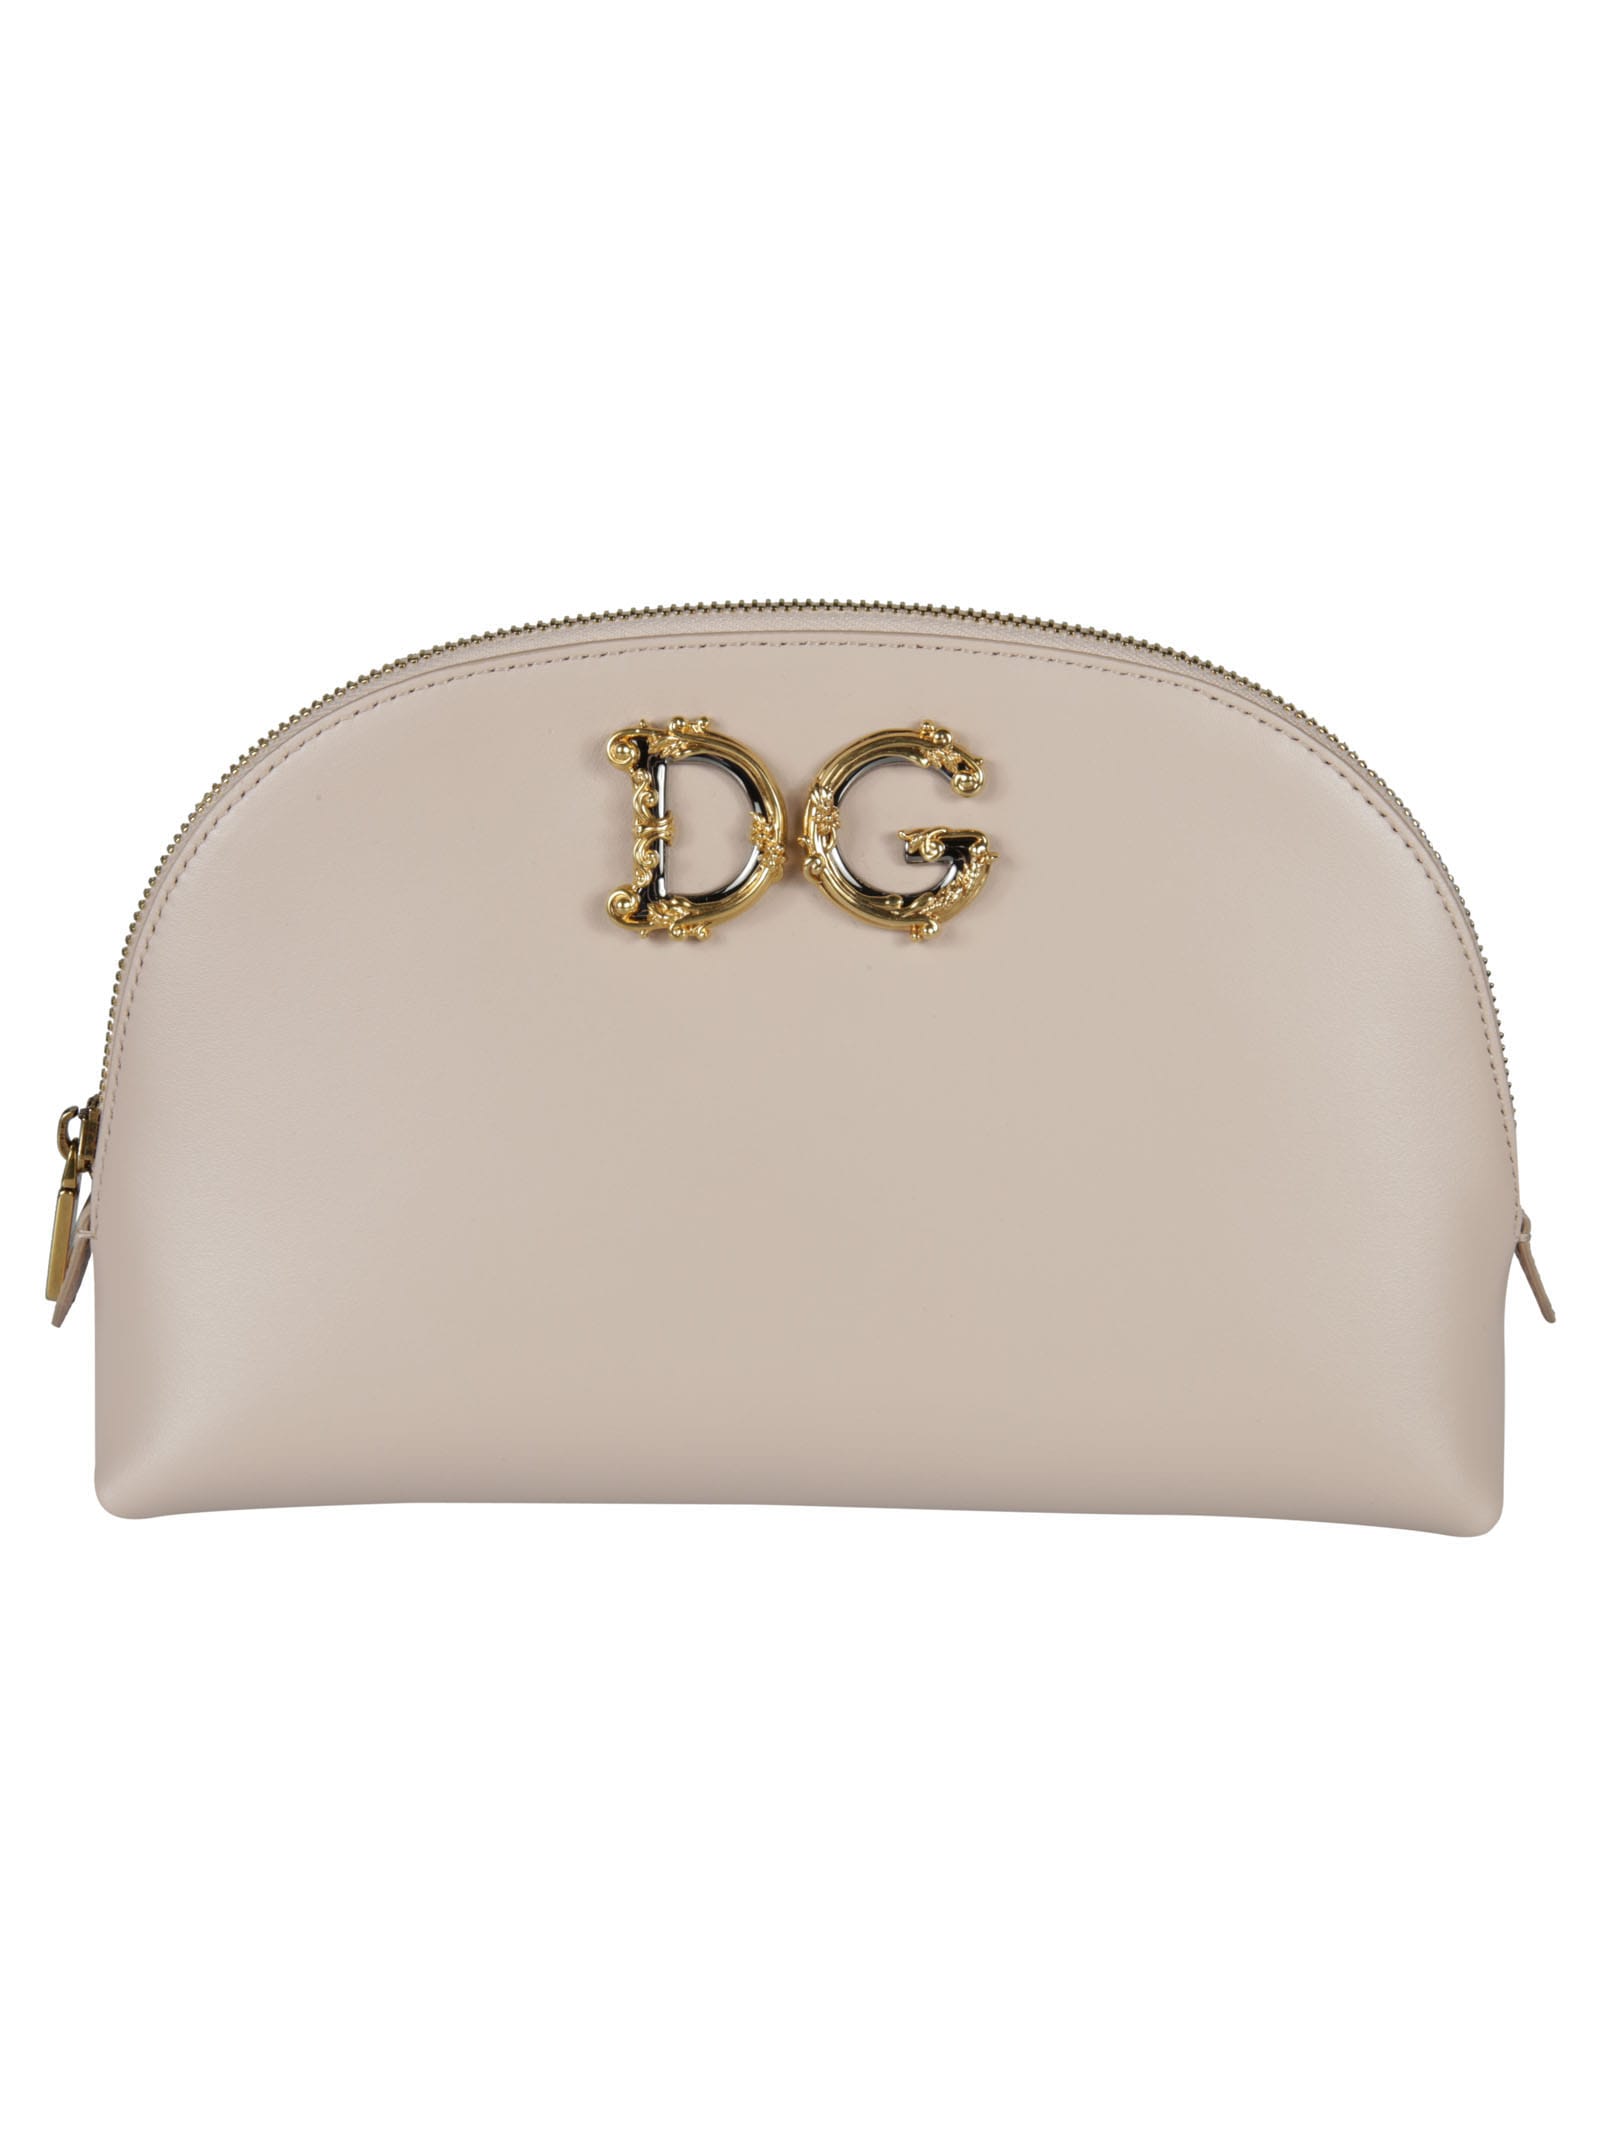 Dolce & Gabbana Logo Cosmetic Pouch